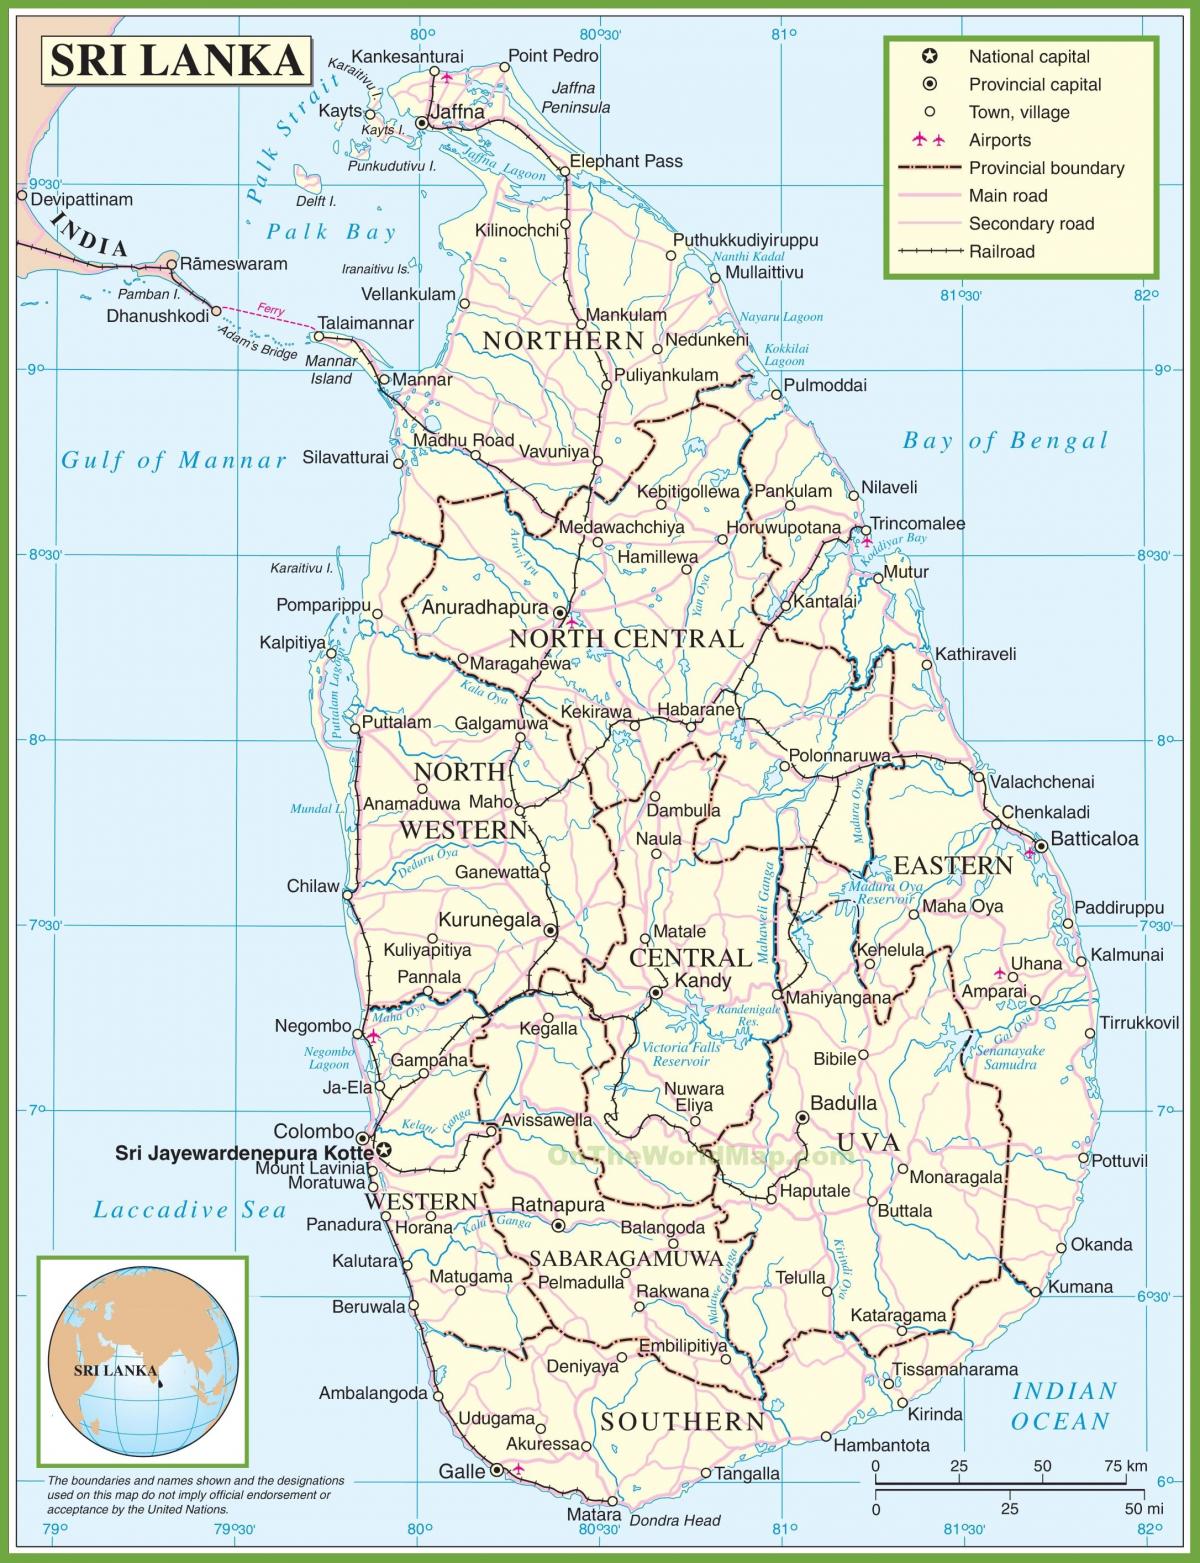 a map of Sri Lanka